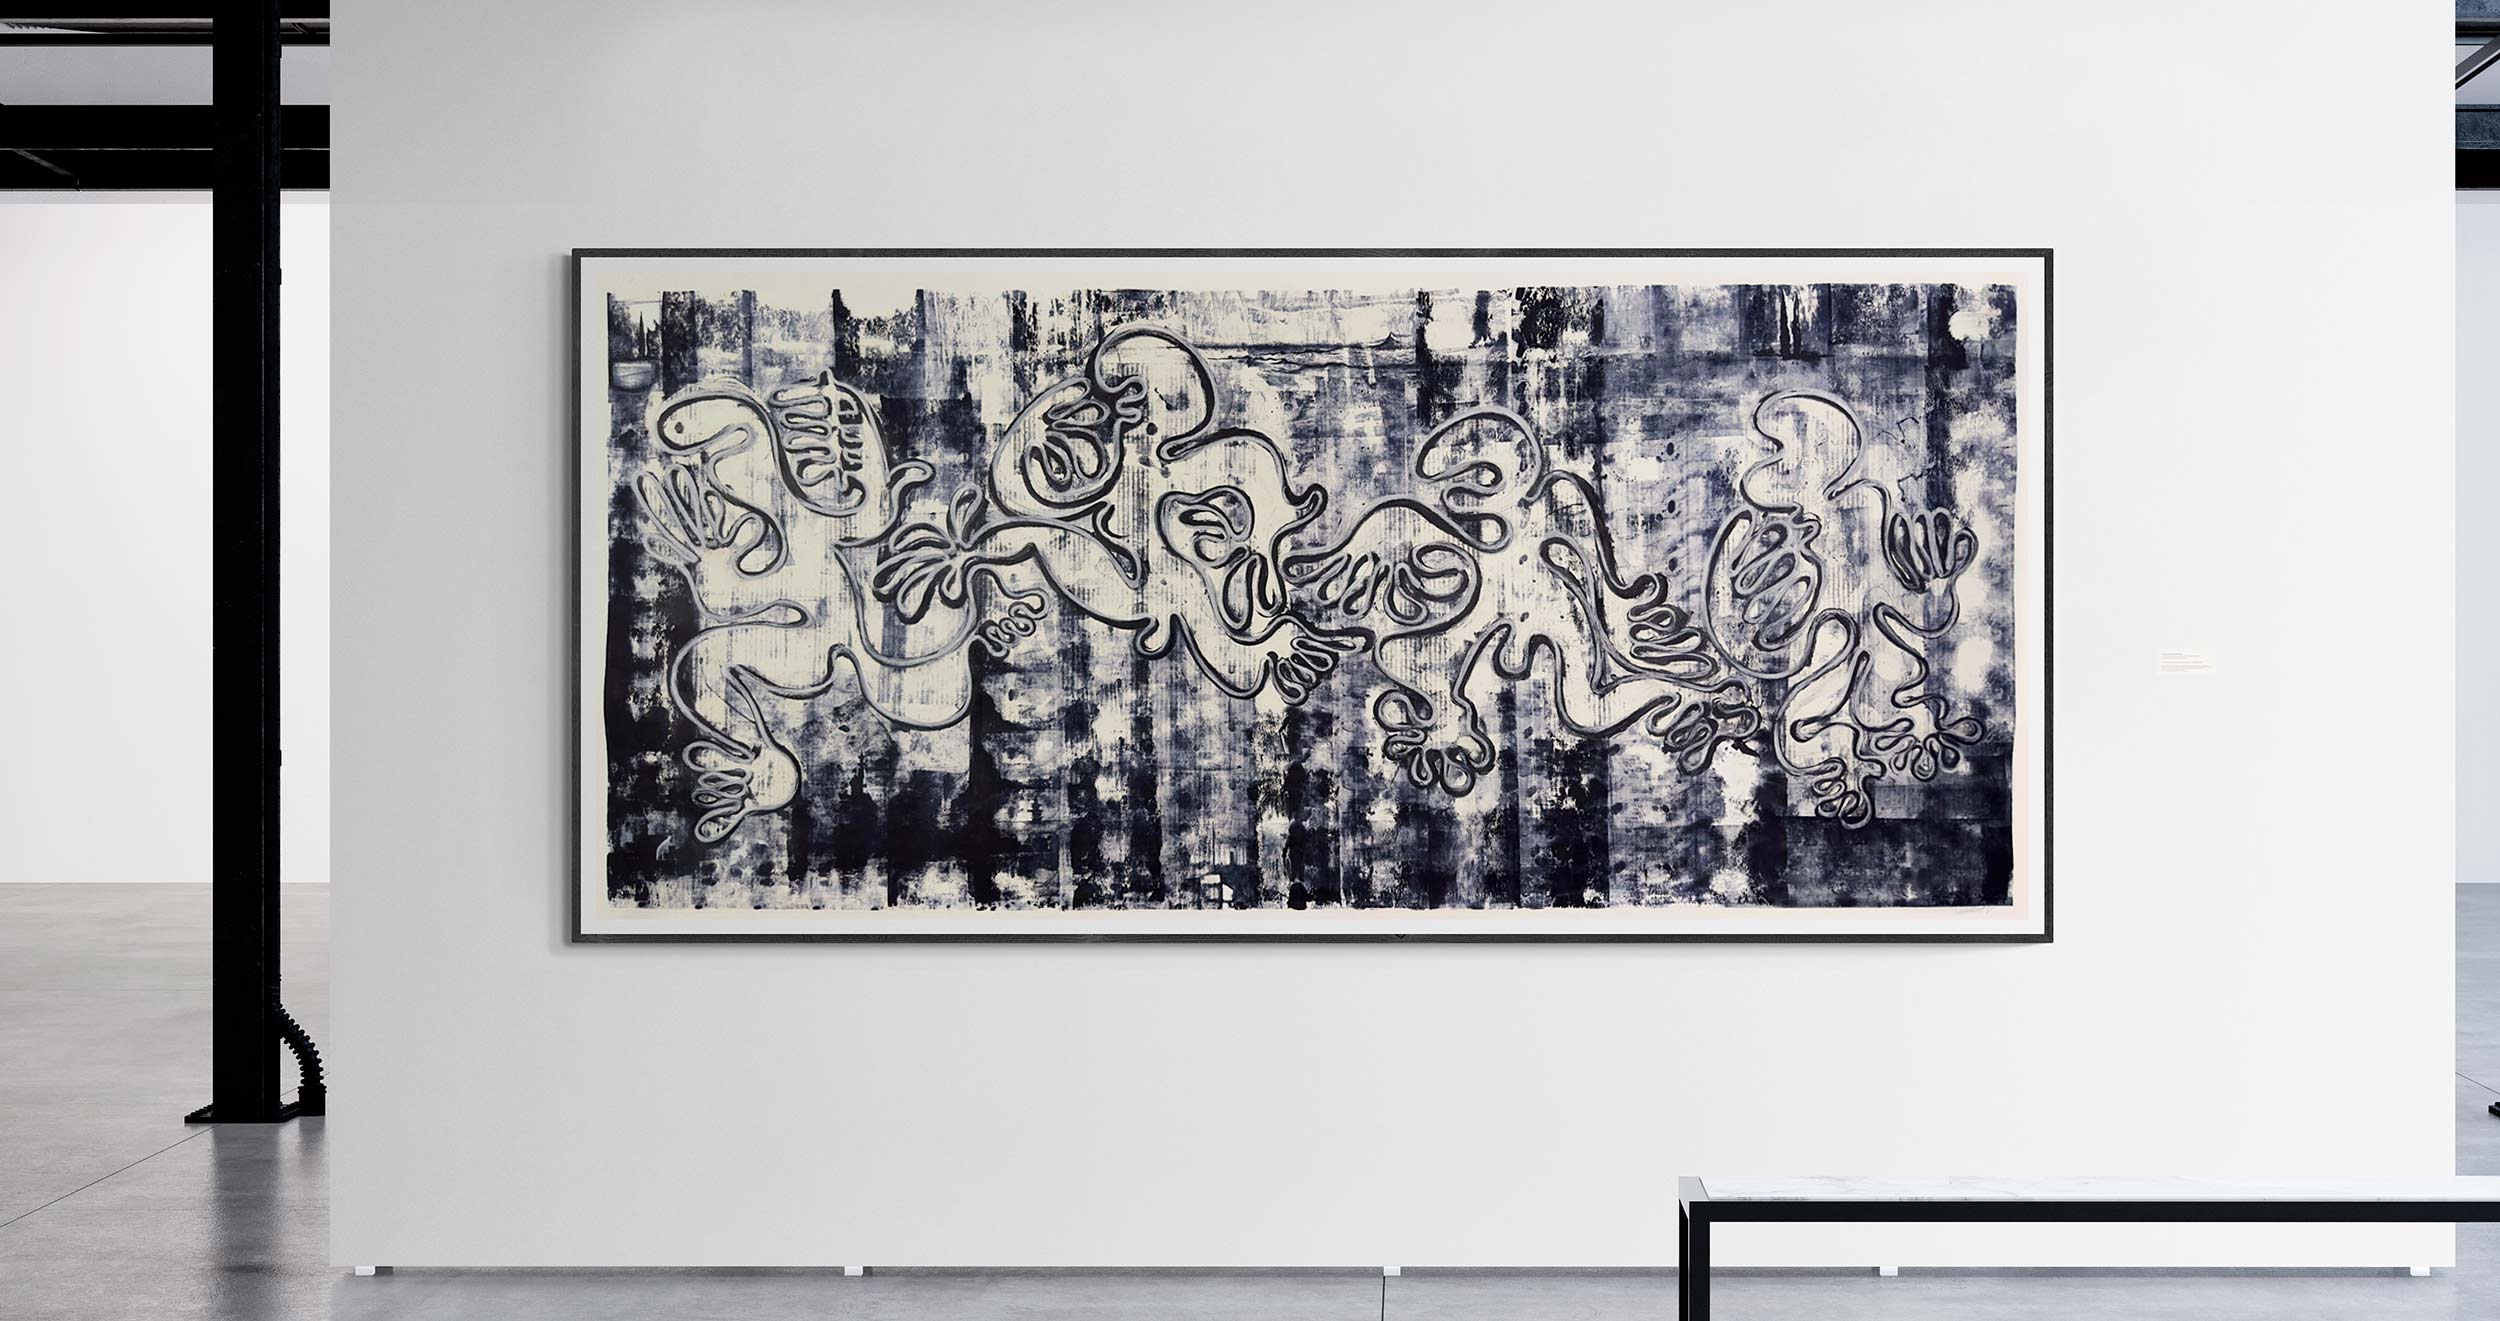 Robert Santoré "KAVA DANCERS" With ... 83 x 41in (210.82 x 104.14cm) Hand painted mono-print on 100% acid free cotton rag